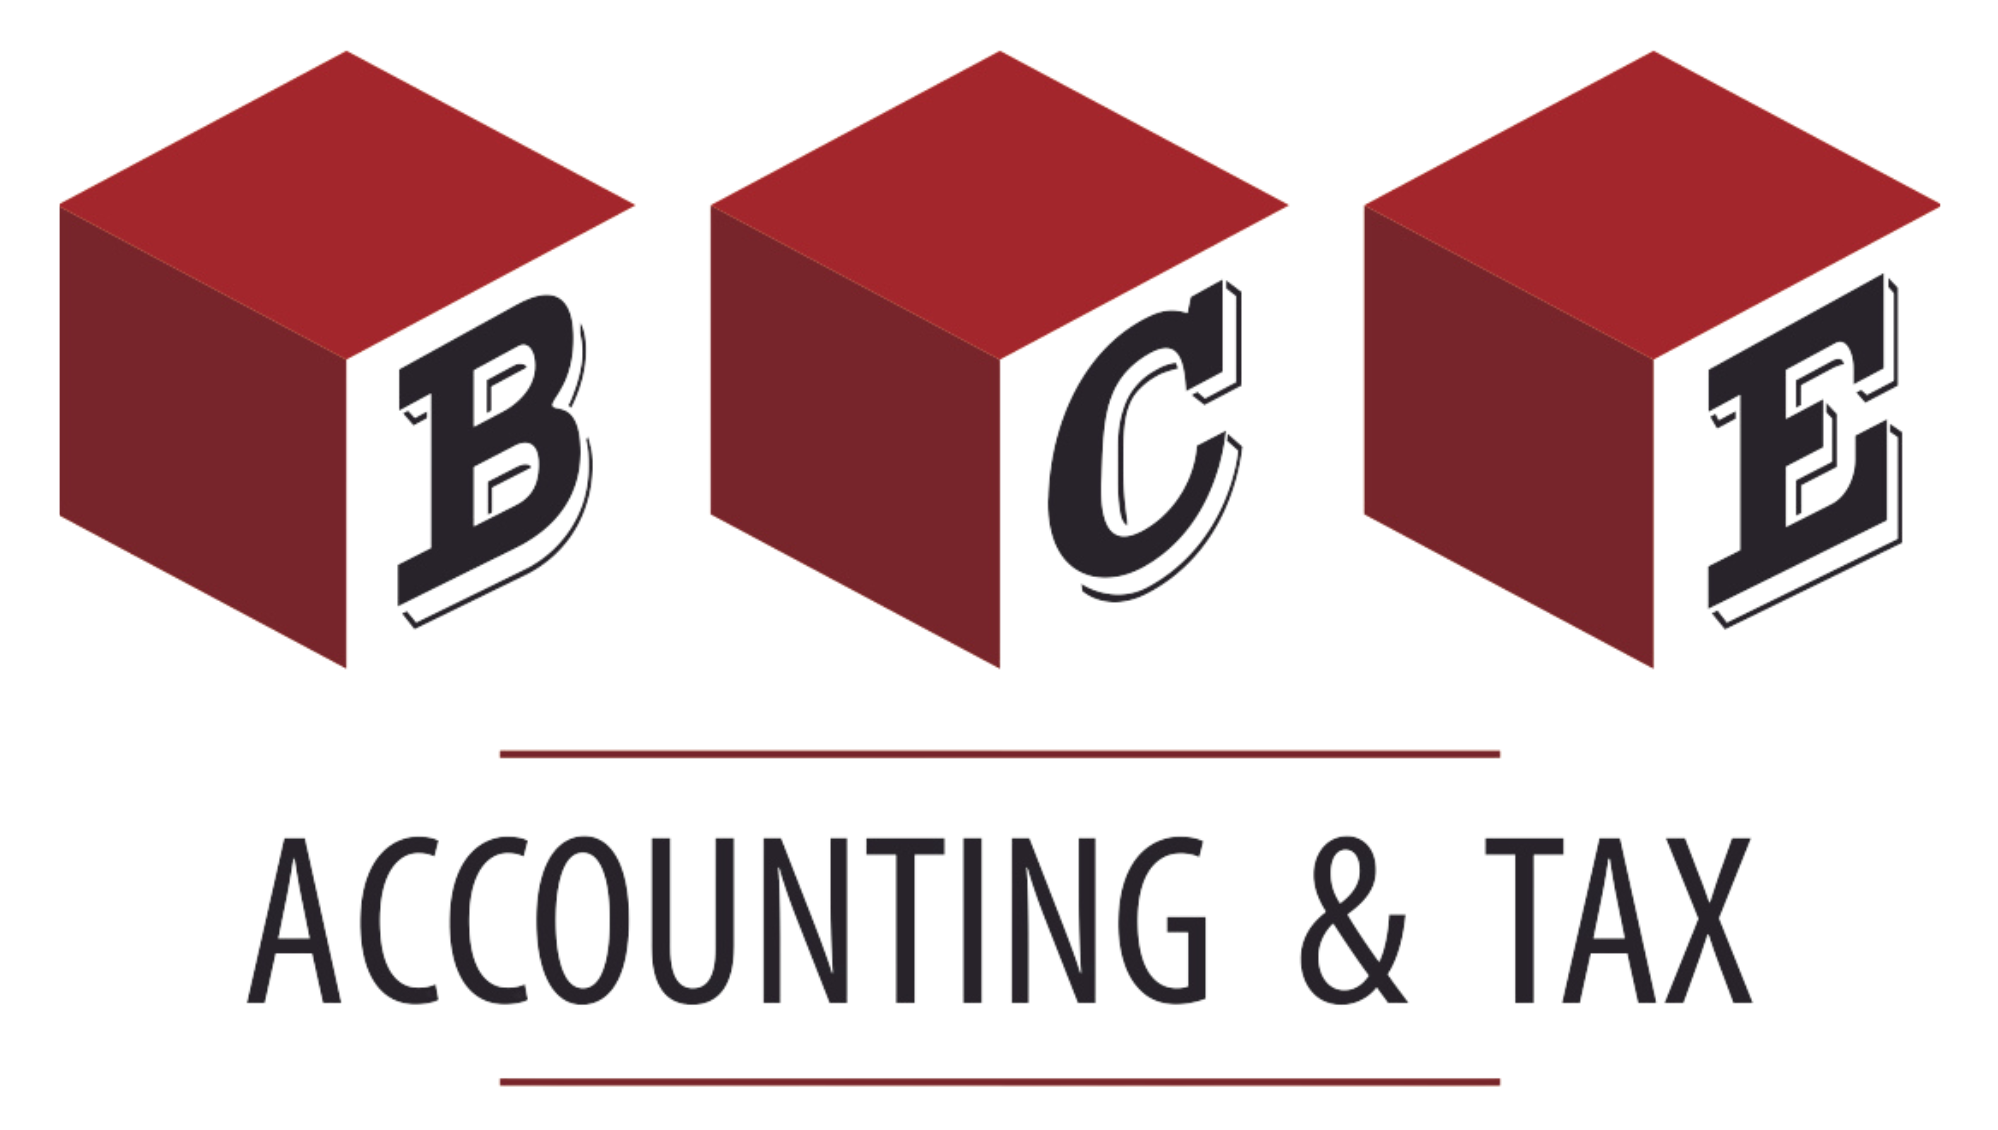 Proactive Business Accounting & Tax Strategies from BCE. Minimize tax burdens, maximize profits, & achieve long-term success.